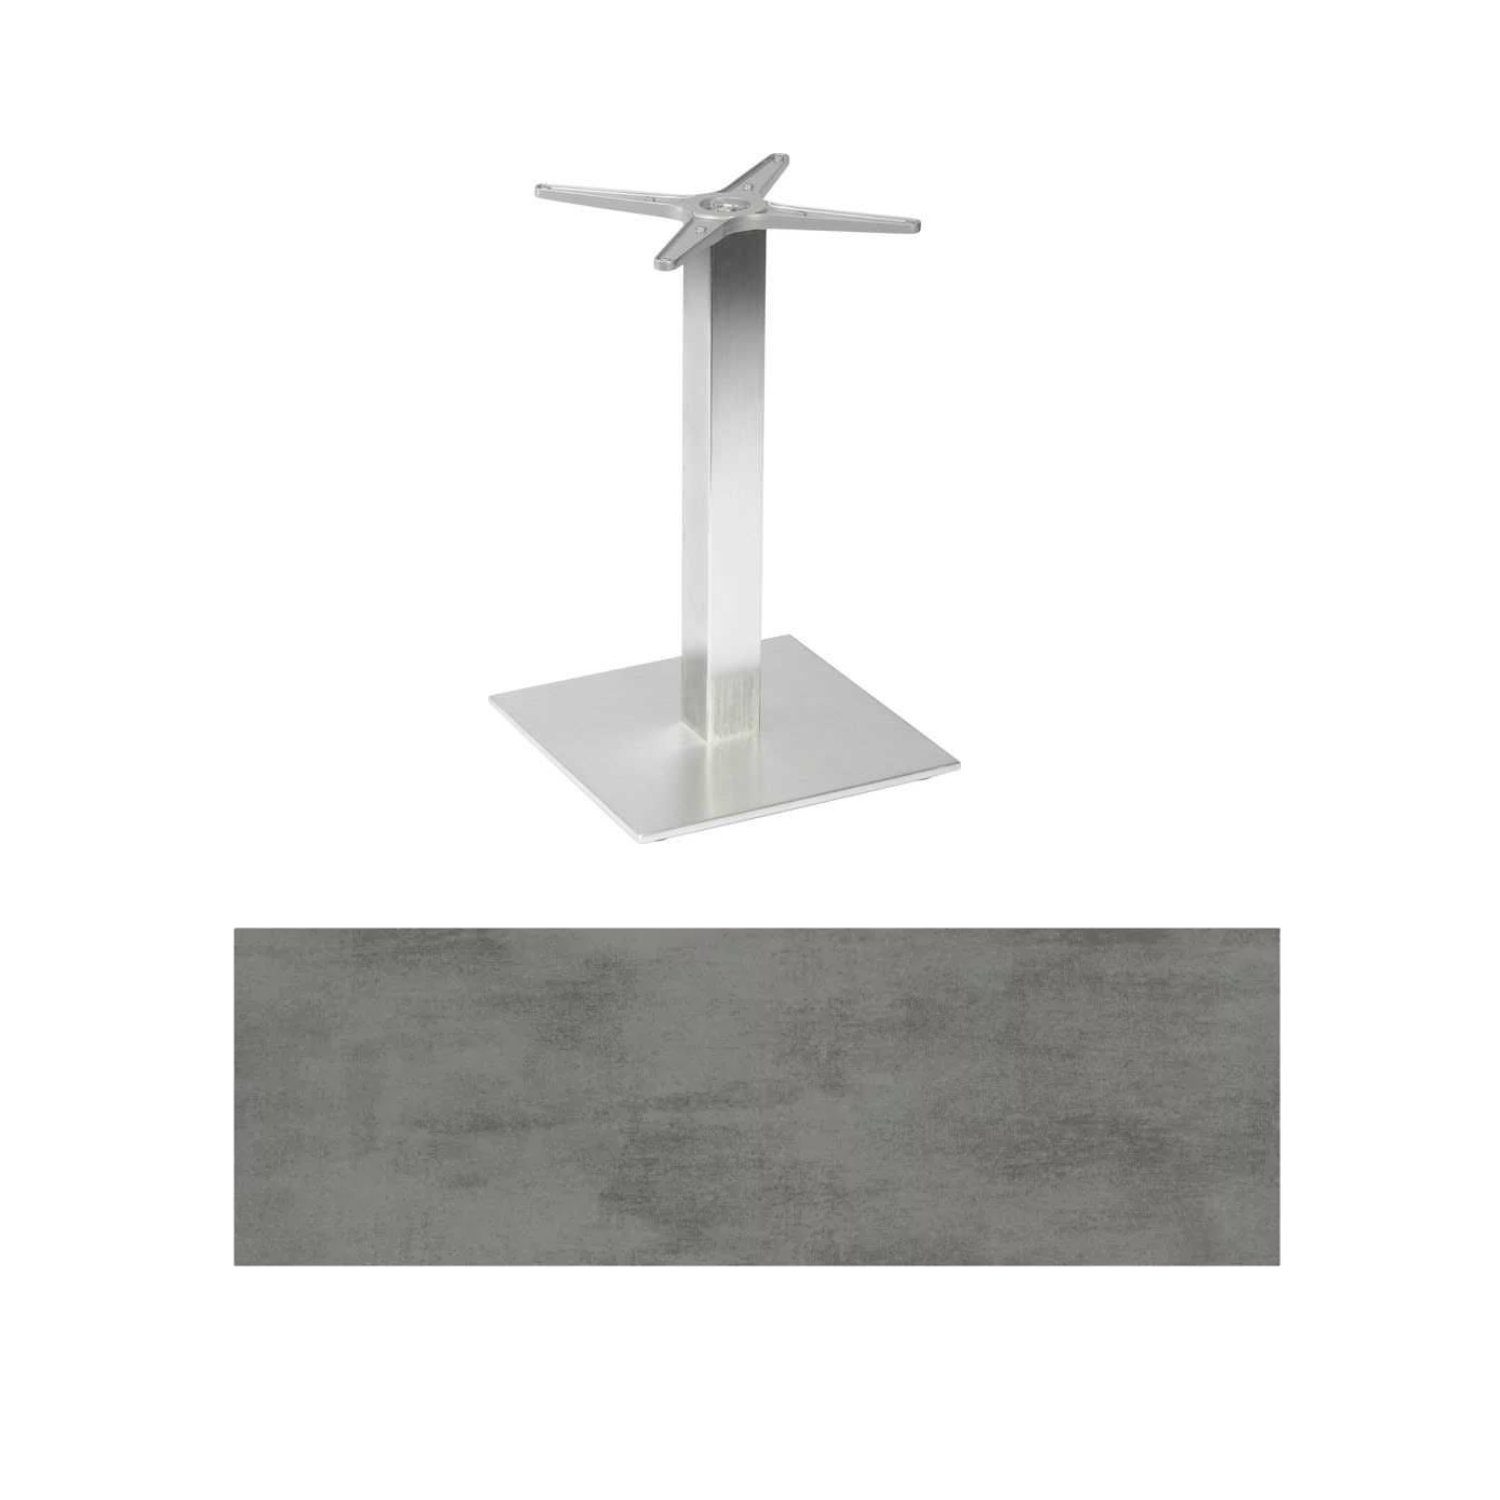 Stern "Mailand" Bistrotisch 80x80 cm, Aluminium in Edelstahloptik, Tischplatte HPL Zement